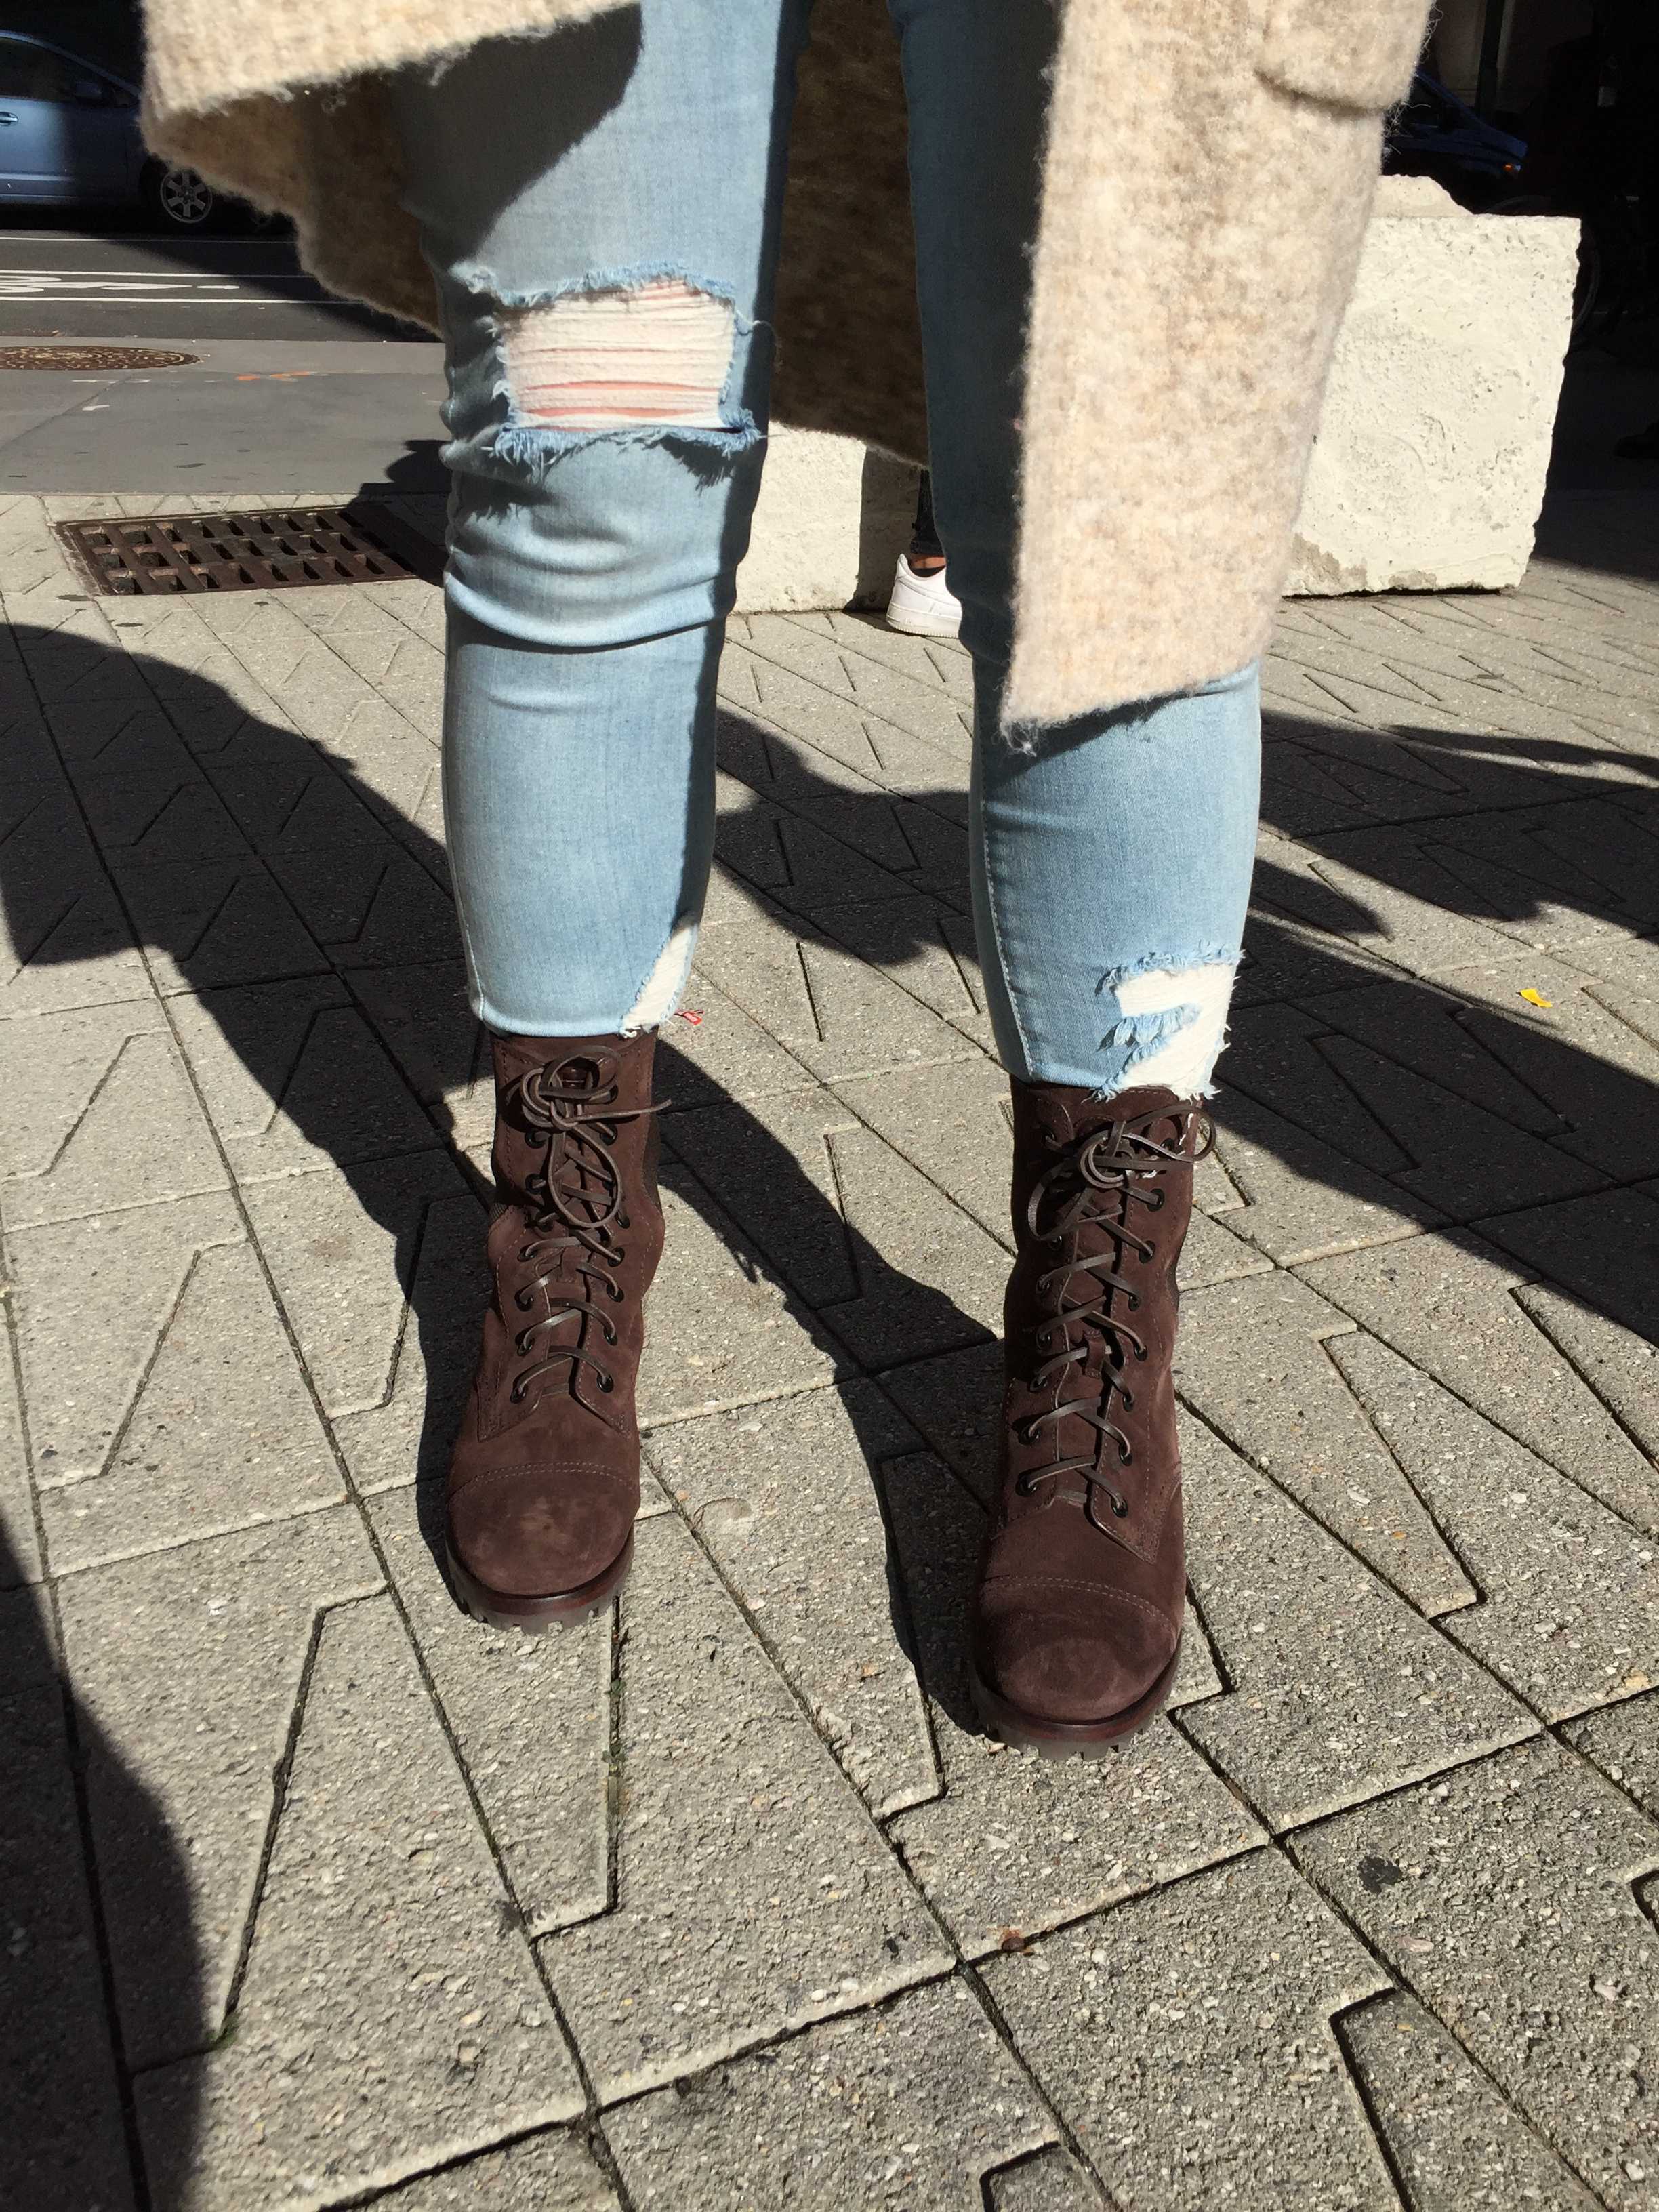 Kristina's boots - photo courtesy of Brianna Adkins